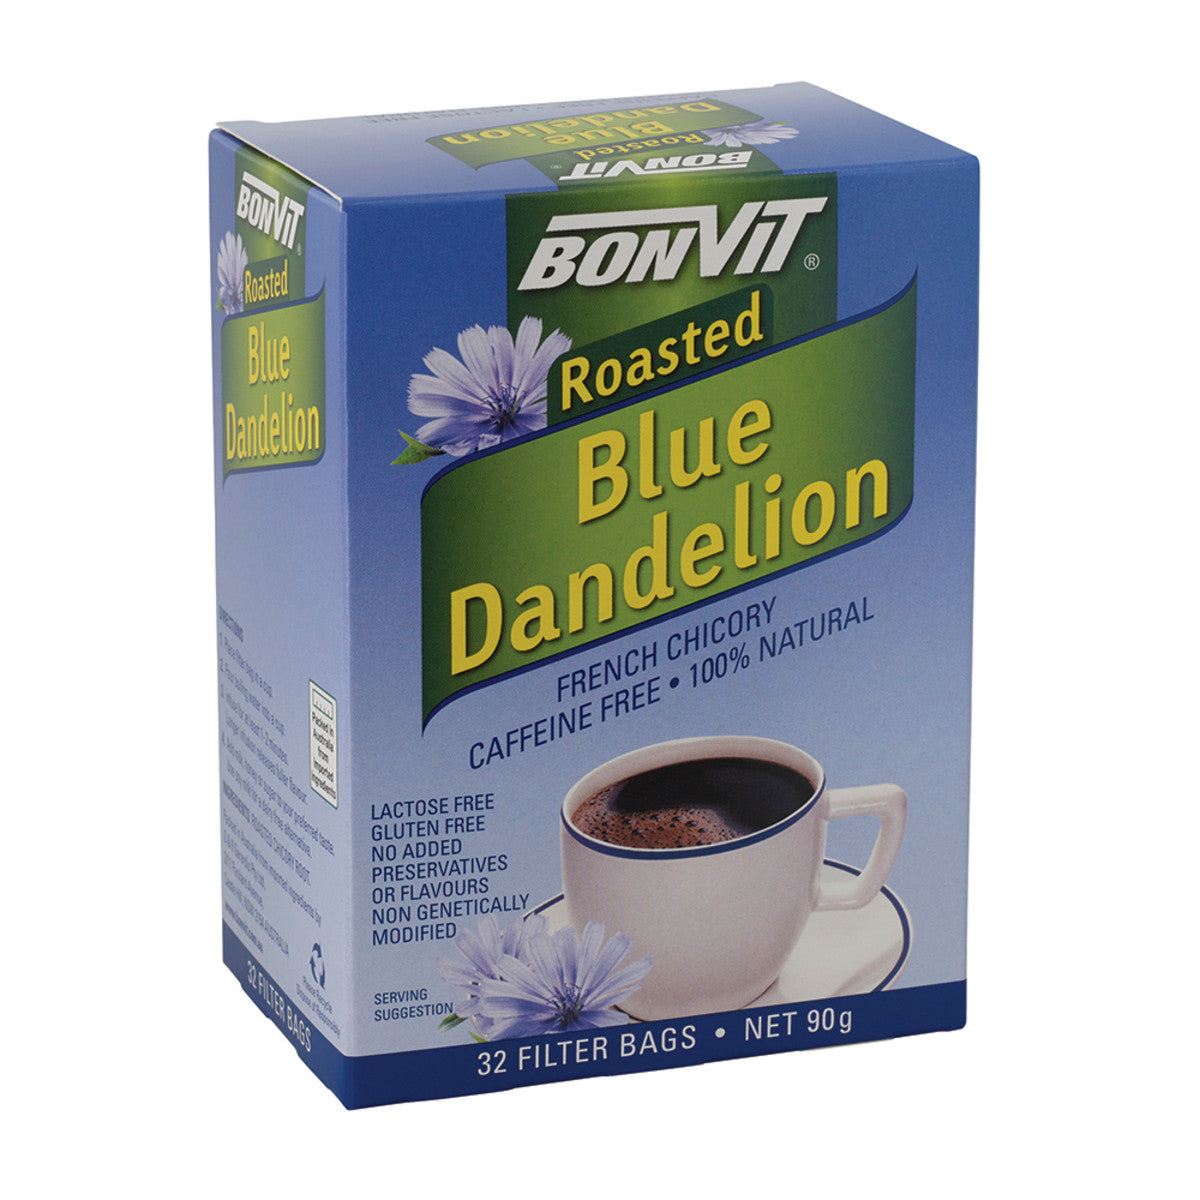 Bonvit Roasted Blue Dandelion French Chicory Tea 32 Filter Tea Bags, Caffeine Free